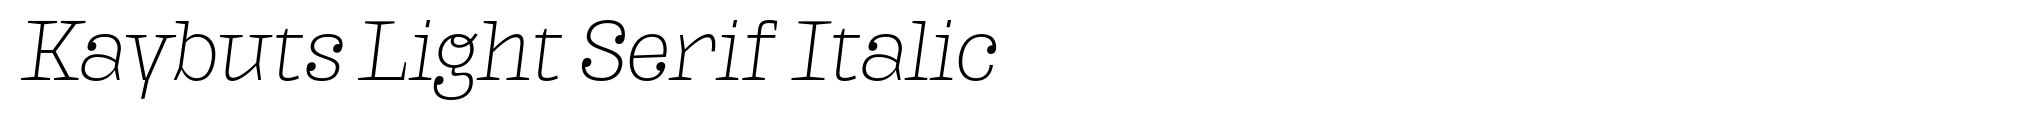 Kaybuts Light Serif Italic image